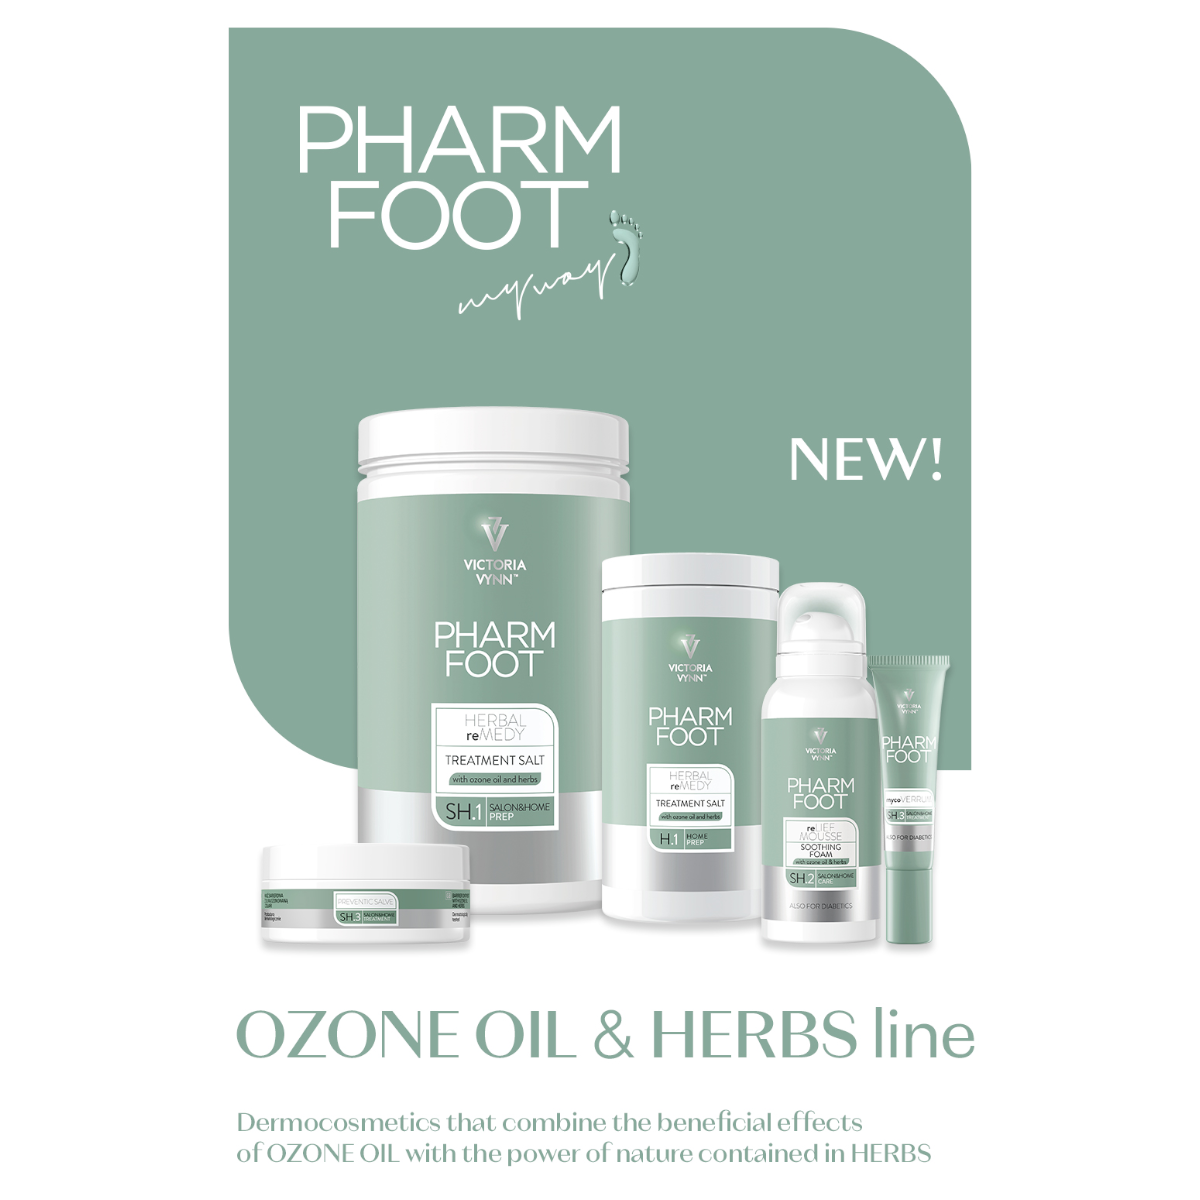 Pharm Foot Herbal reMedy Treatment Salt with Ozone Oil & Herbs SH.1 Line